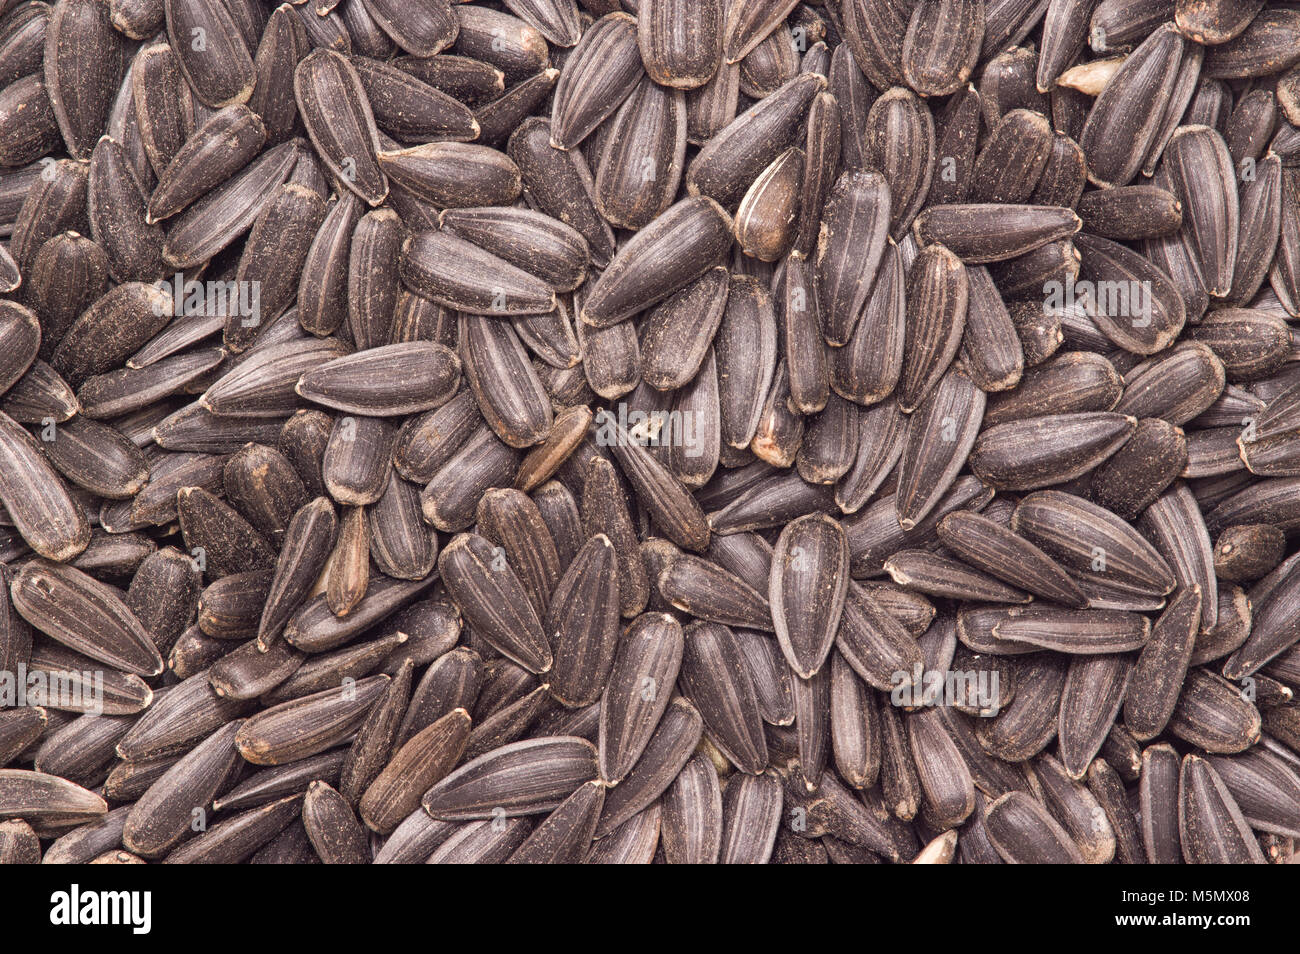 black oil sunflower seeds Stock Photo